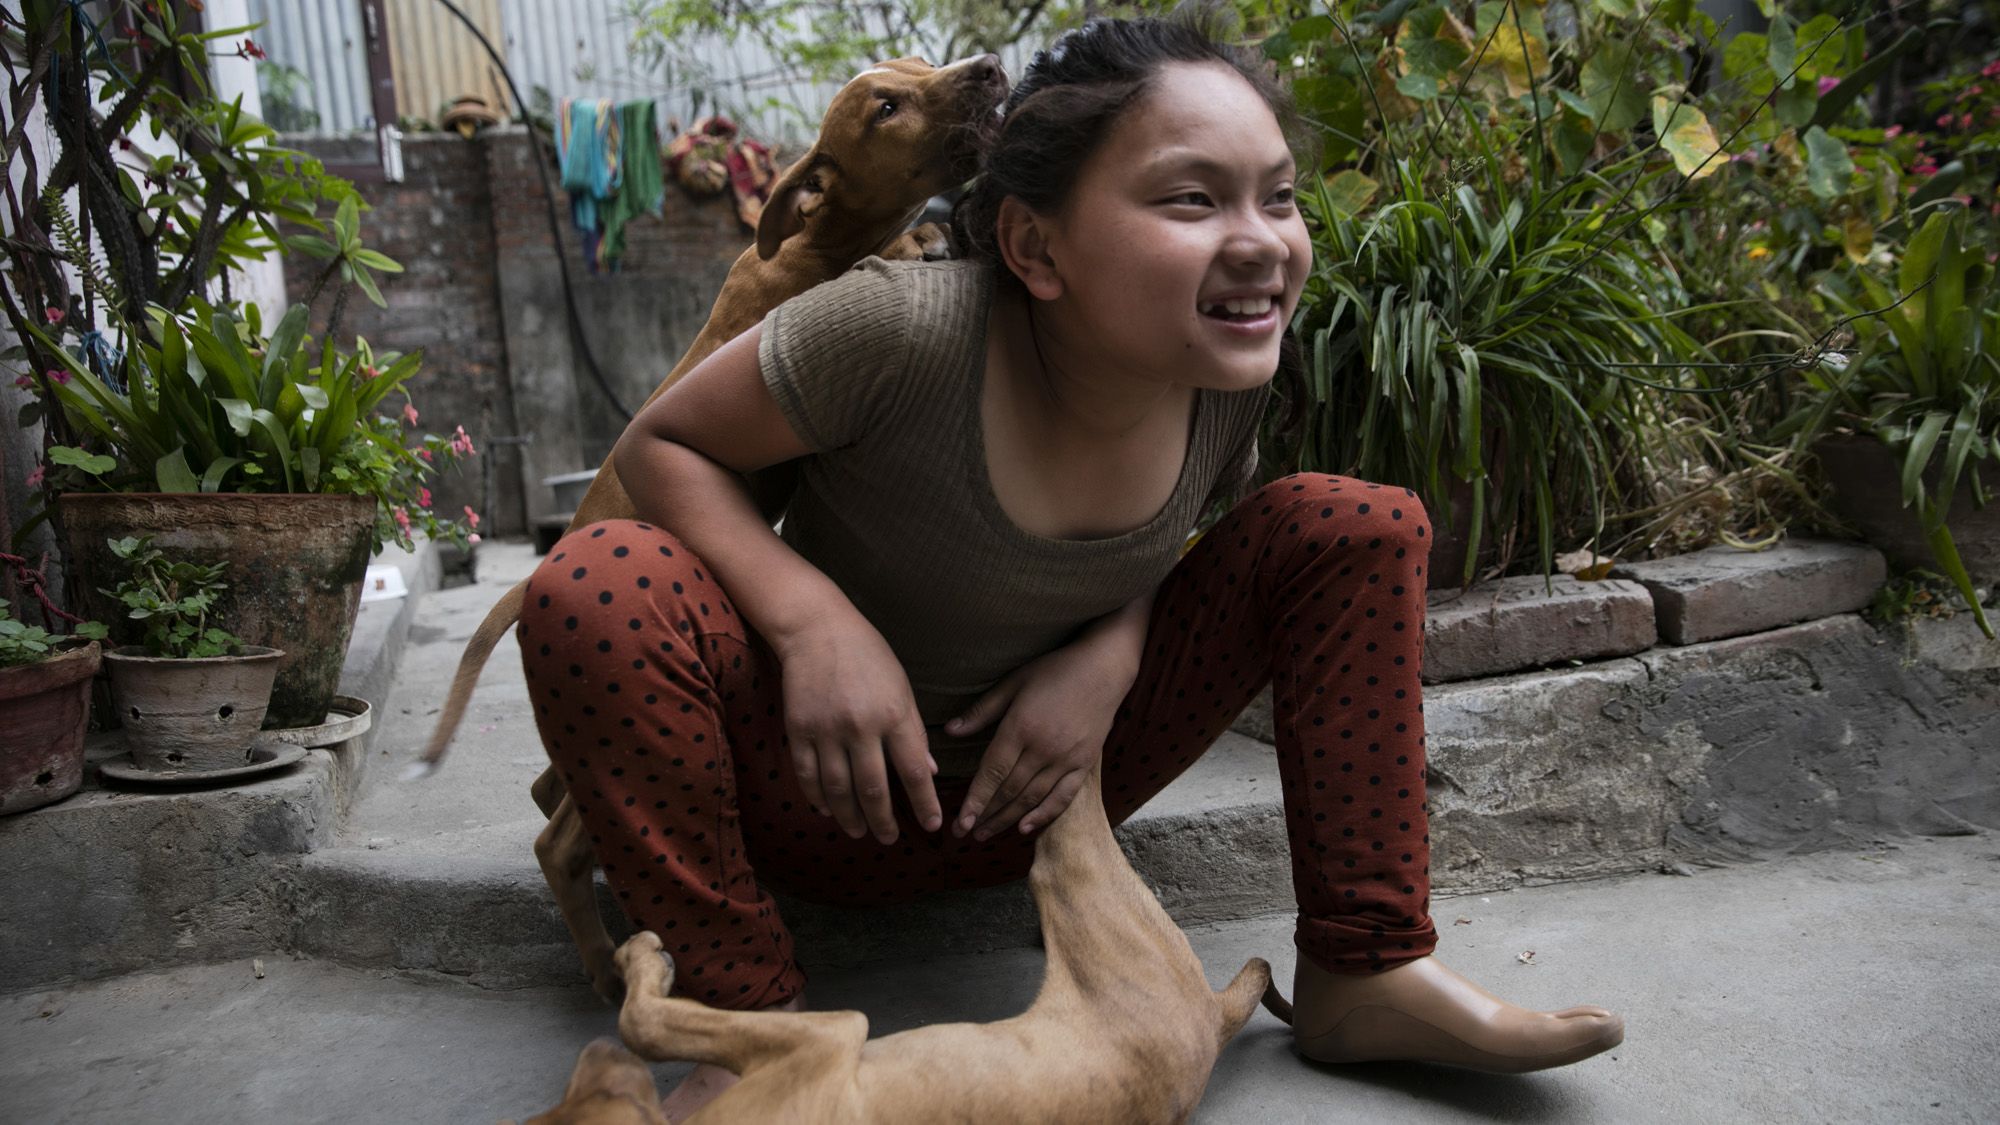 Villege Woman Yong Boy Xxx Video - Nepal quake: One girl's remarkable recovery | CNN